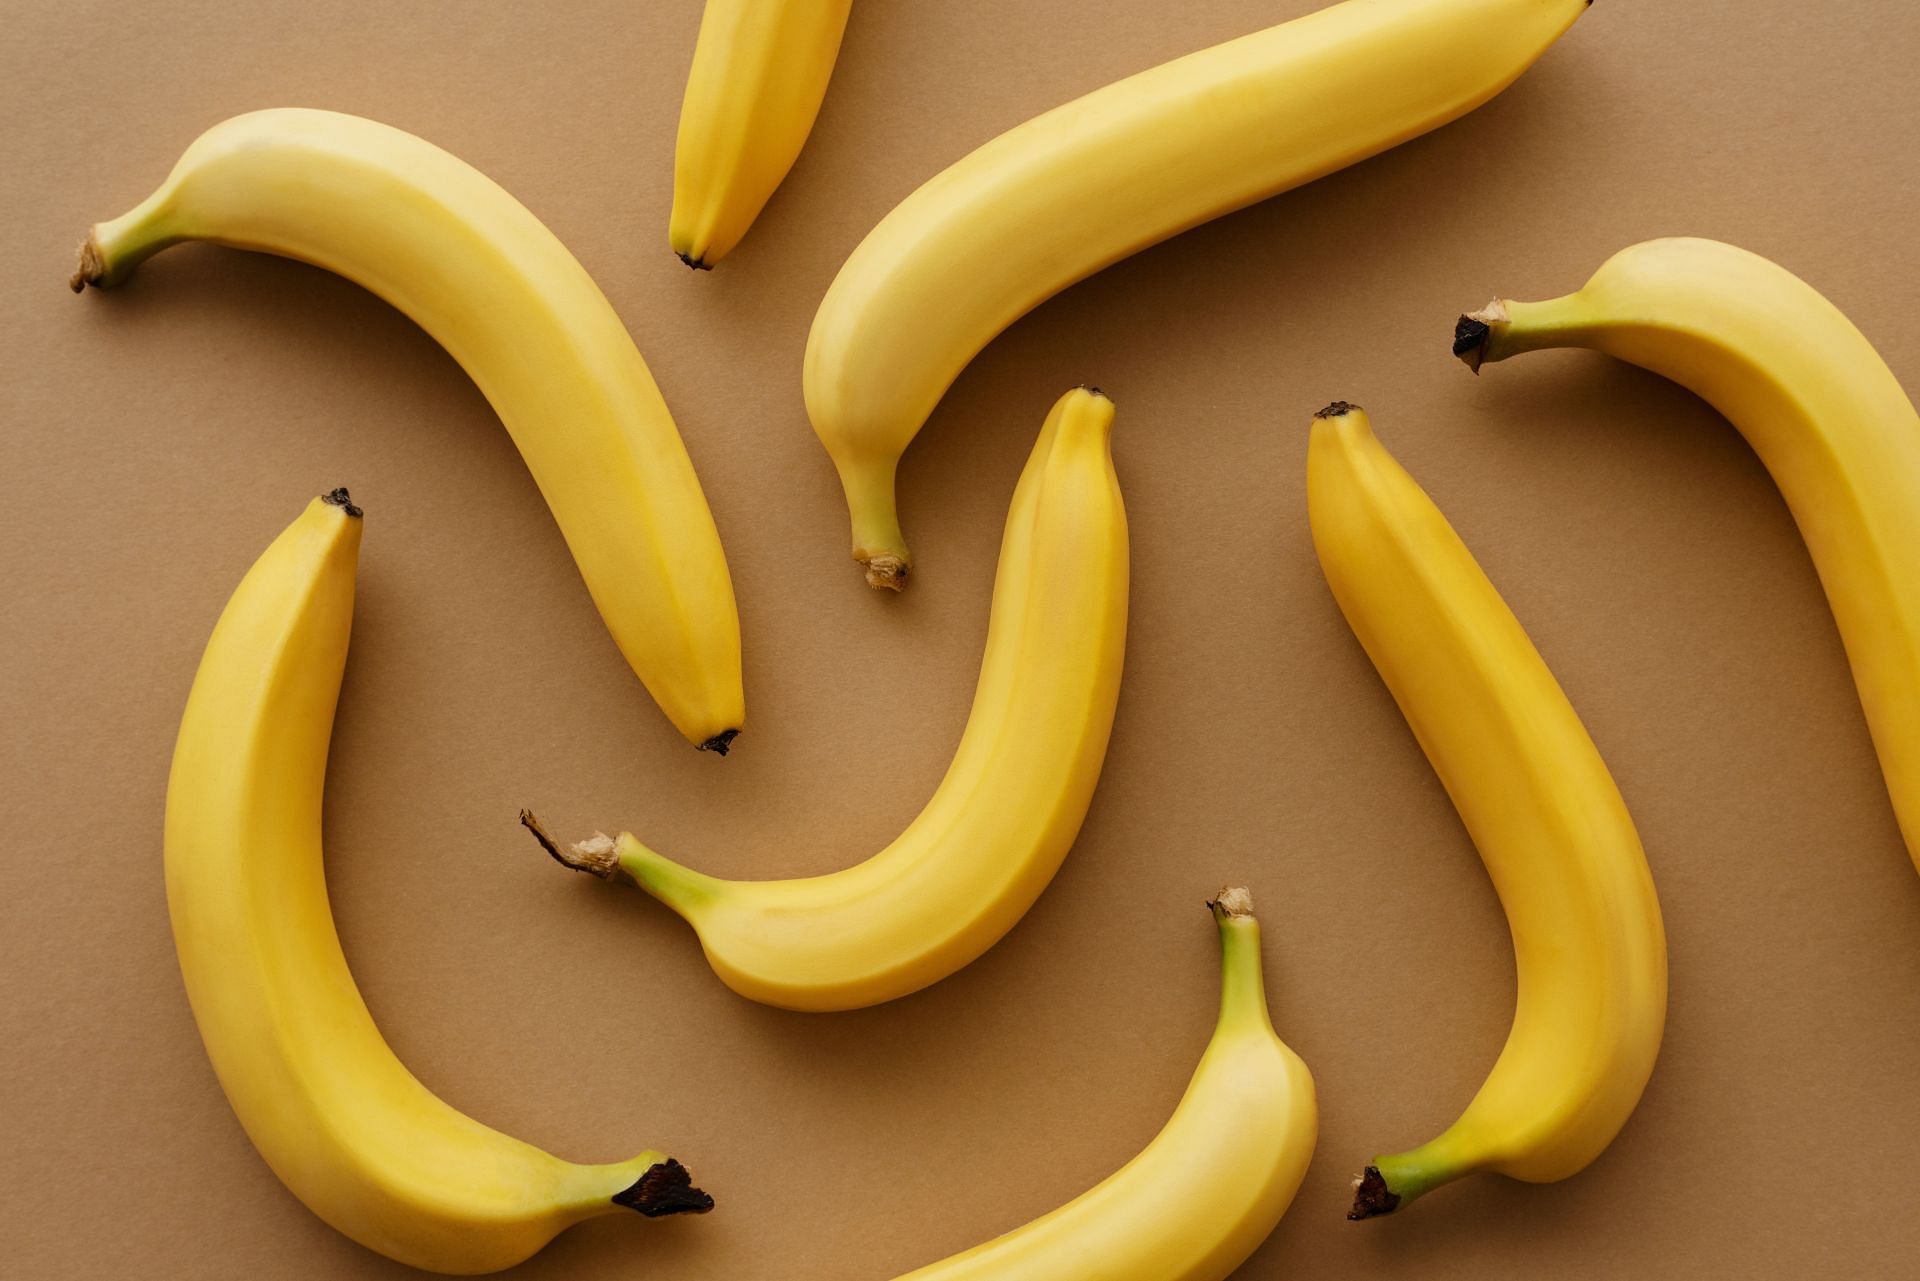 Eating potassium-packed bananas may help reduce the risk of stroke. (Image via Pexels/ Vanessa Loring)